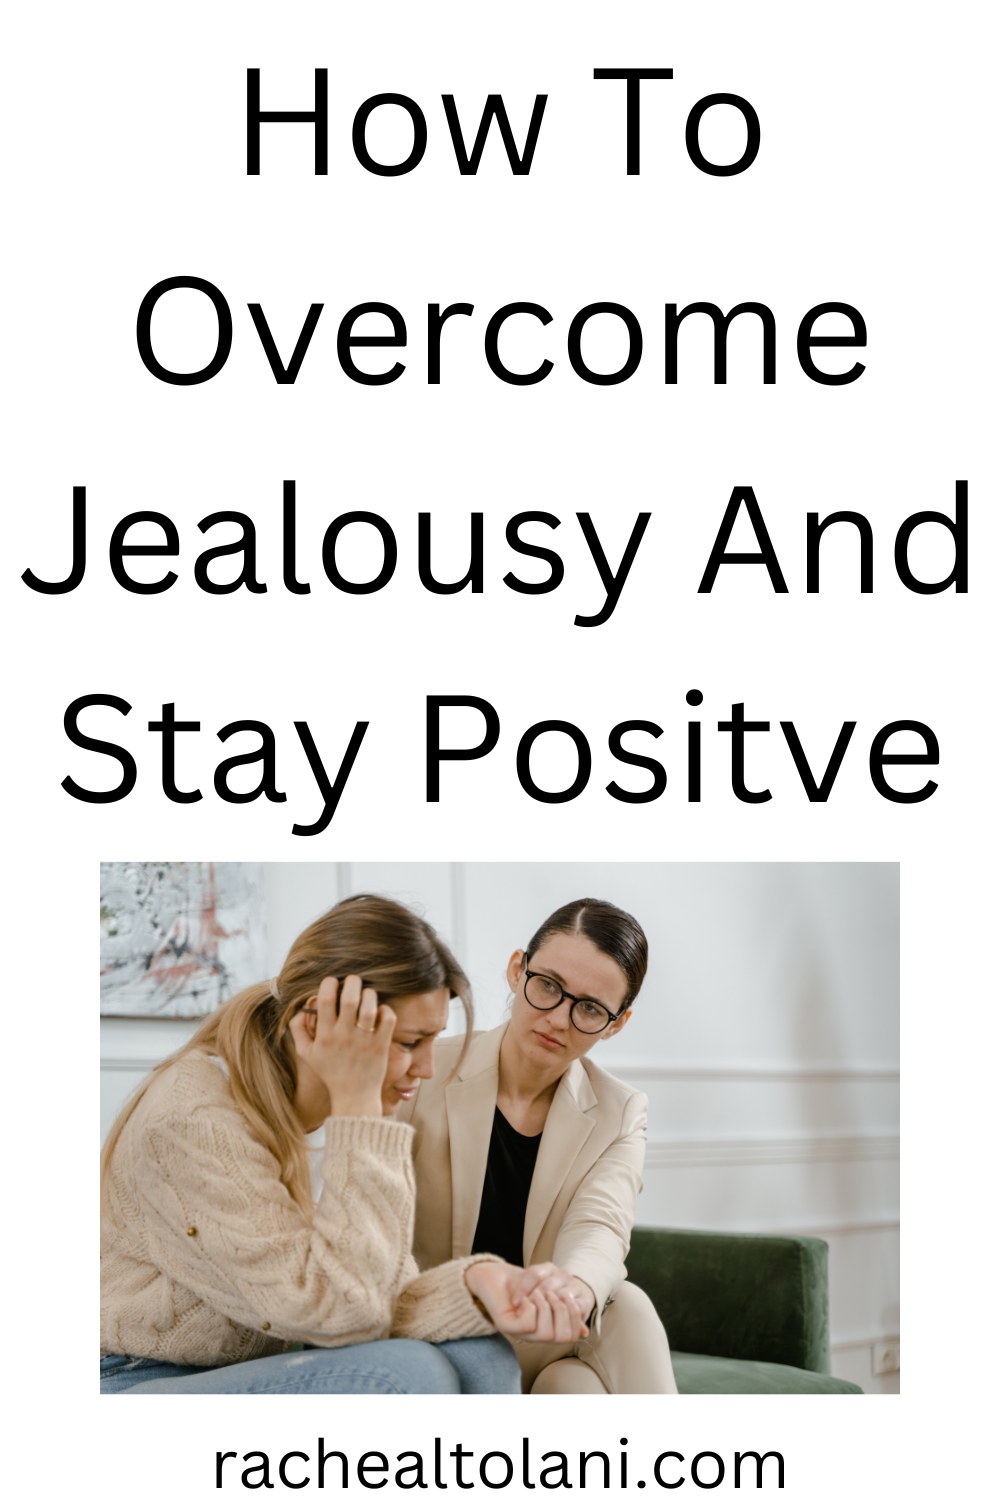 How to overcome jealousy